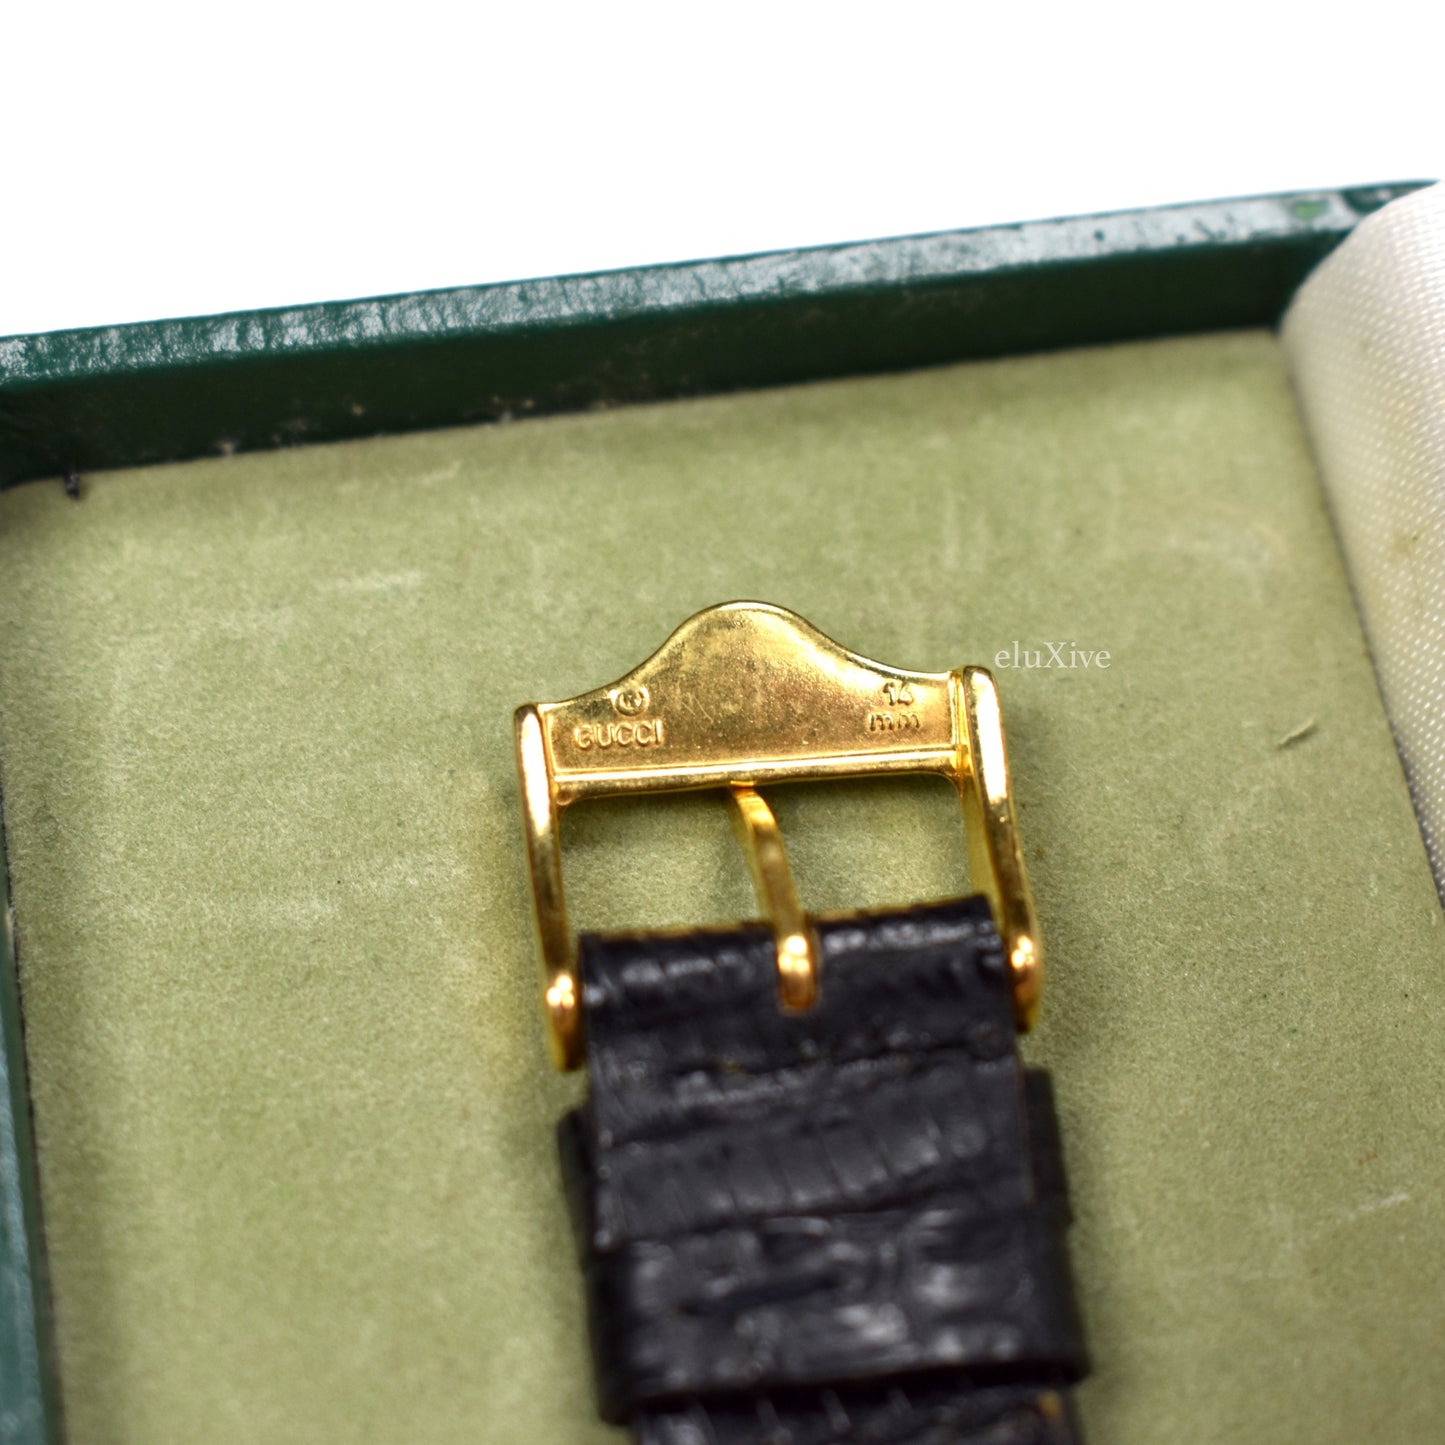 Gucci - Men's 2000M Black Dial Watch